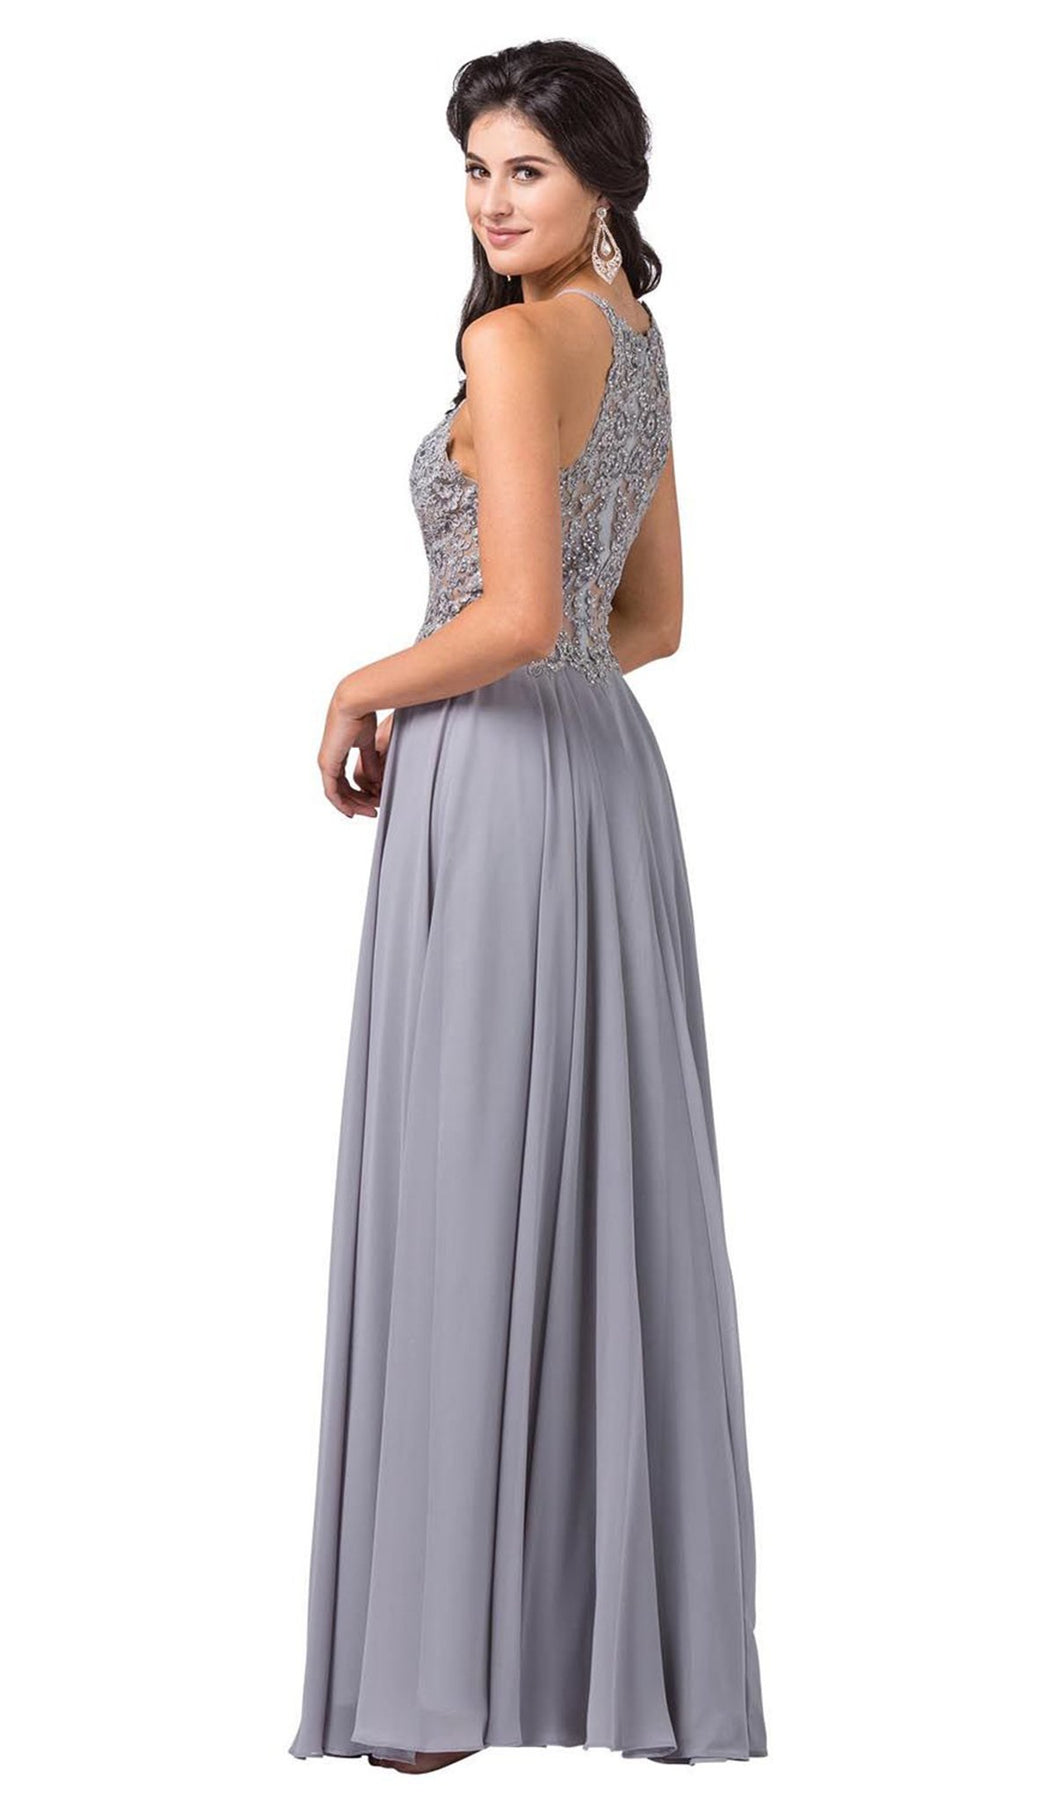 Dancing Queen - 2716 Lace Applique Halter A-line Dress In Silver